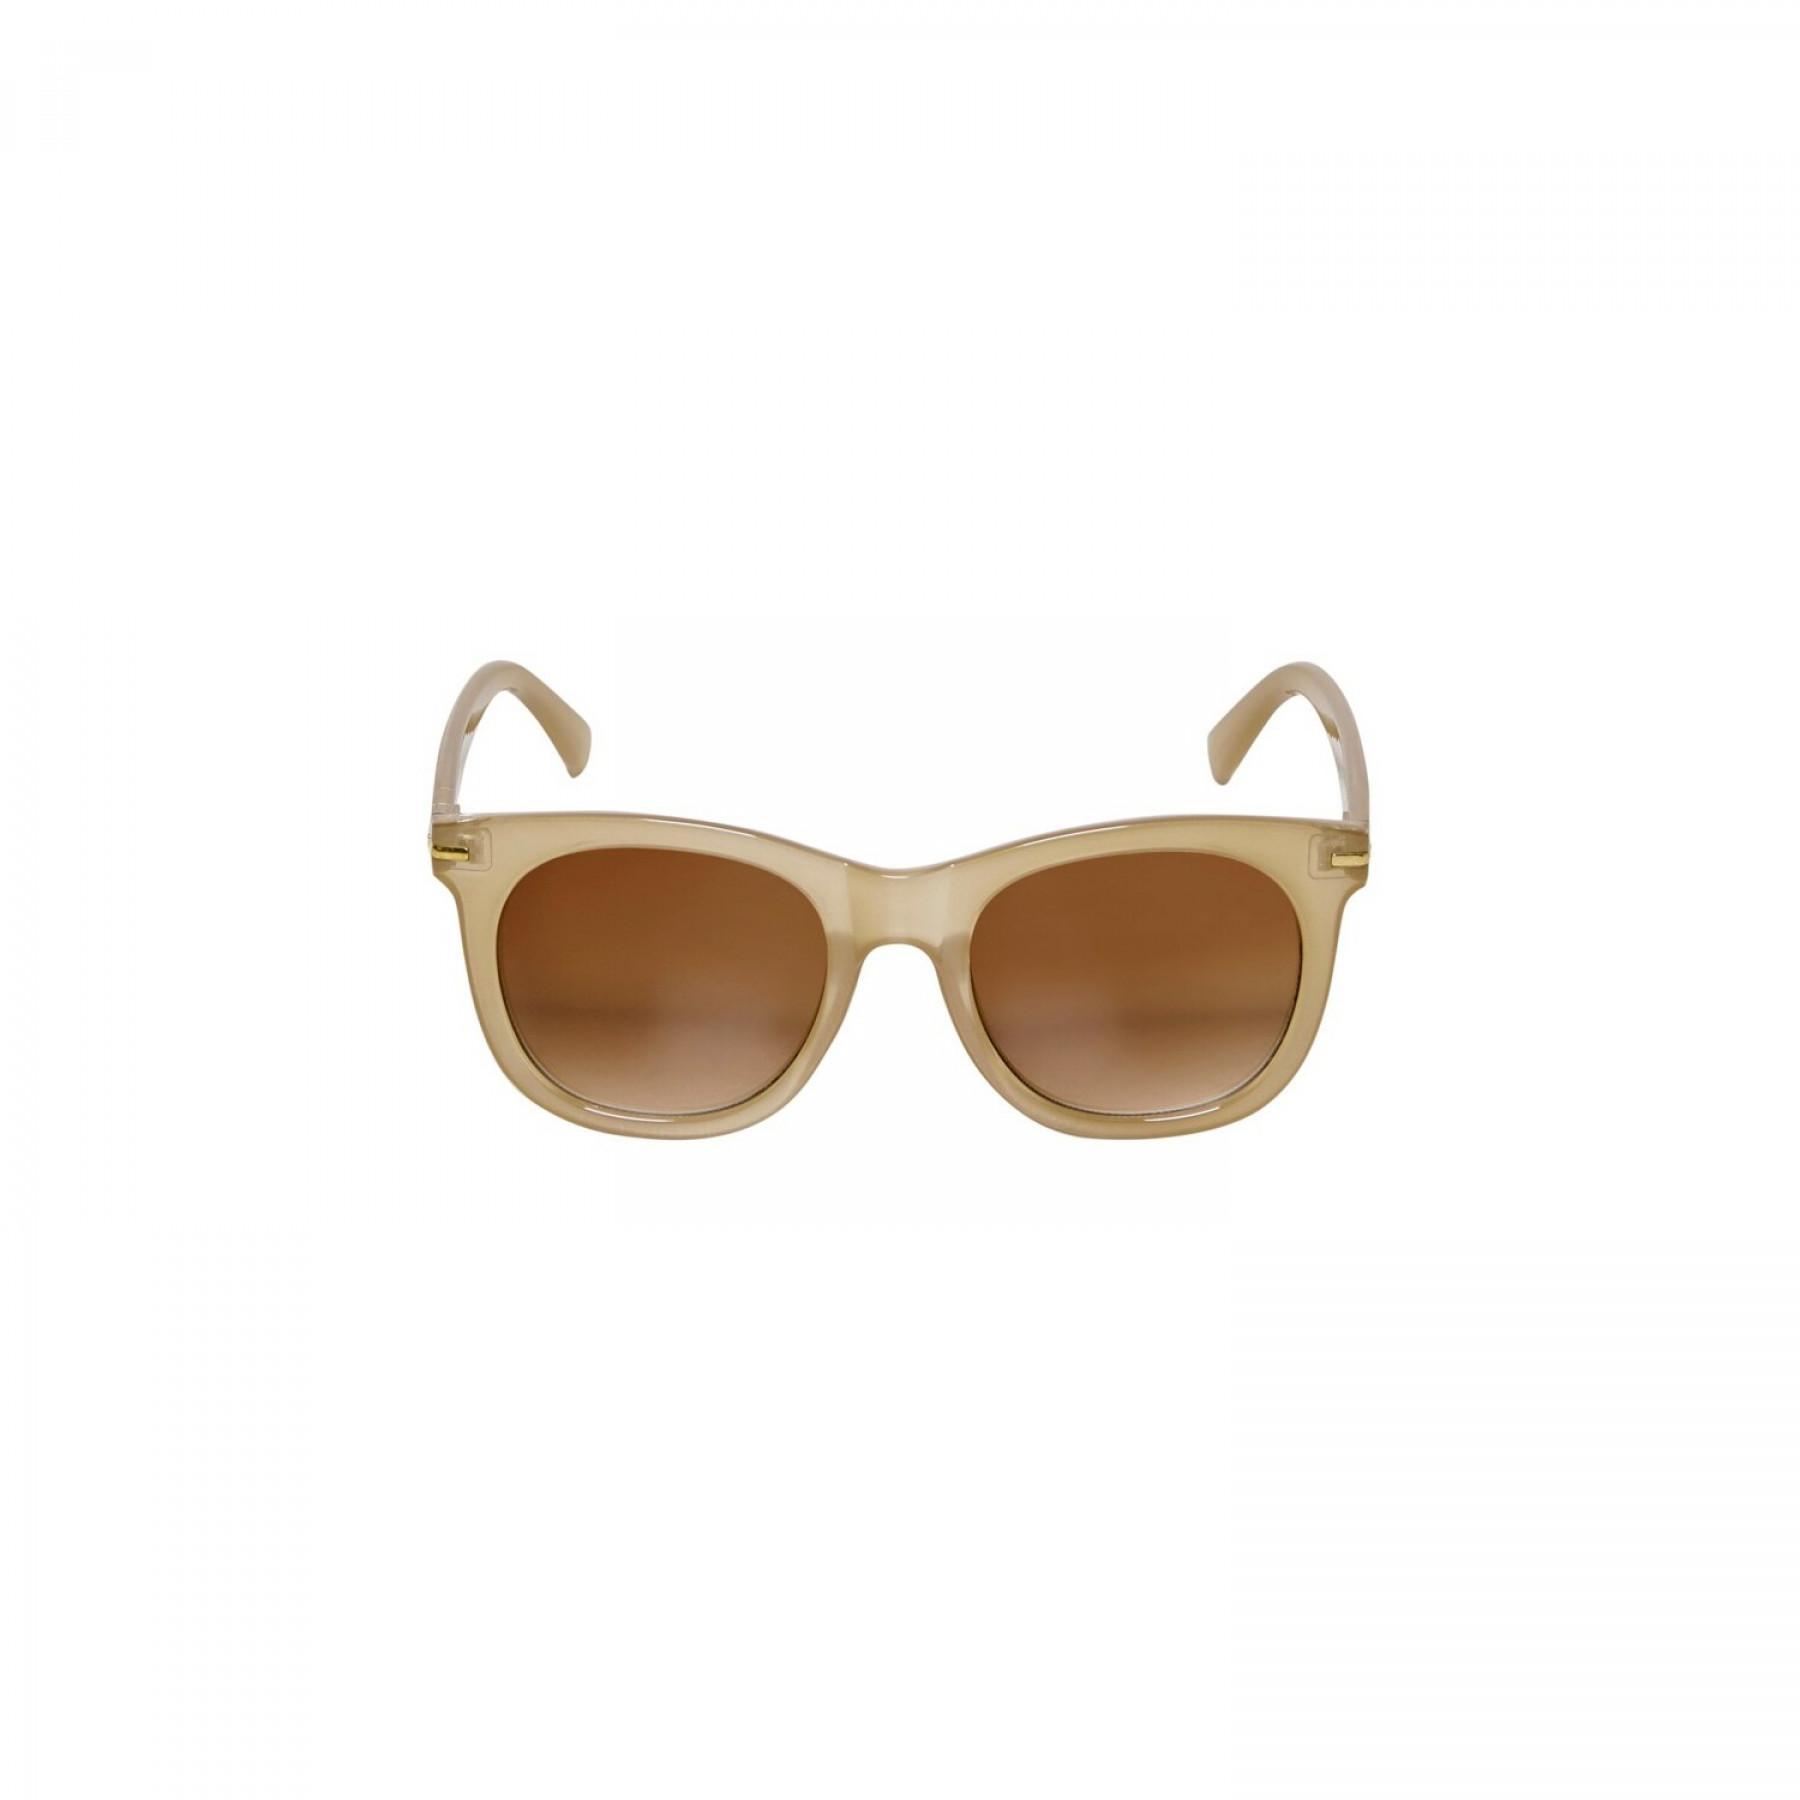 Women's sunglasses Only onl trend box